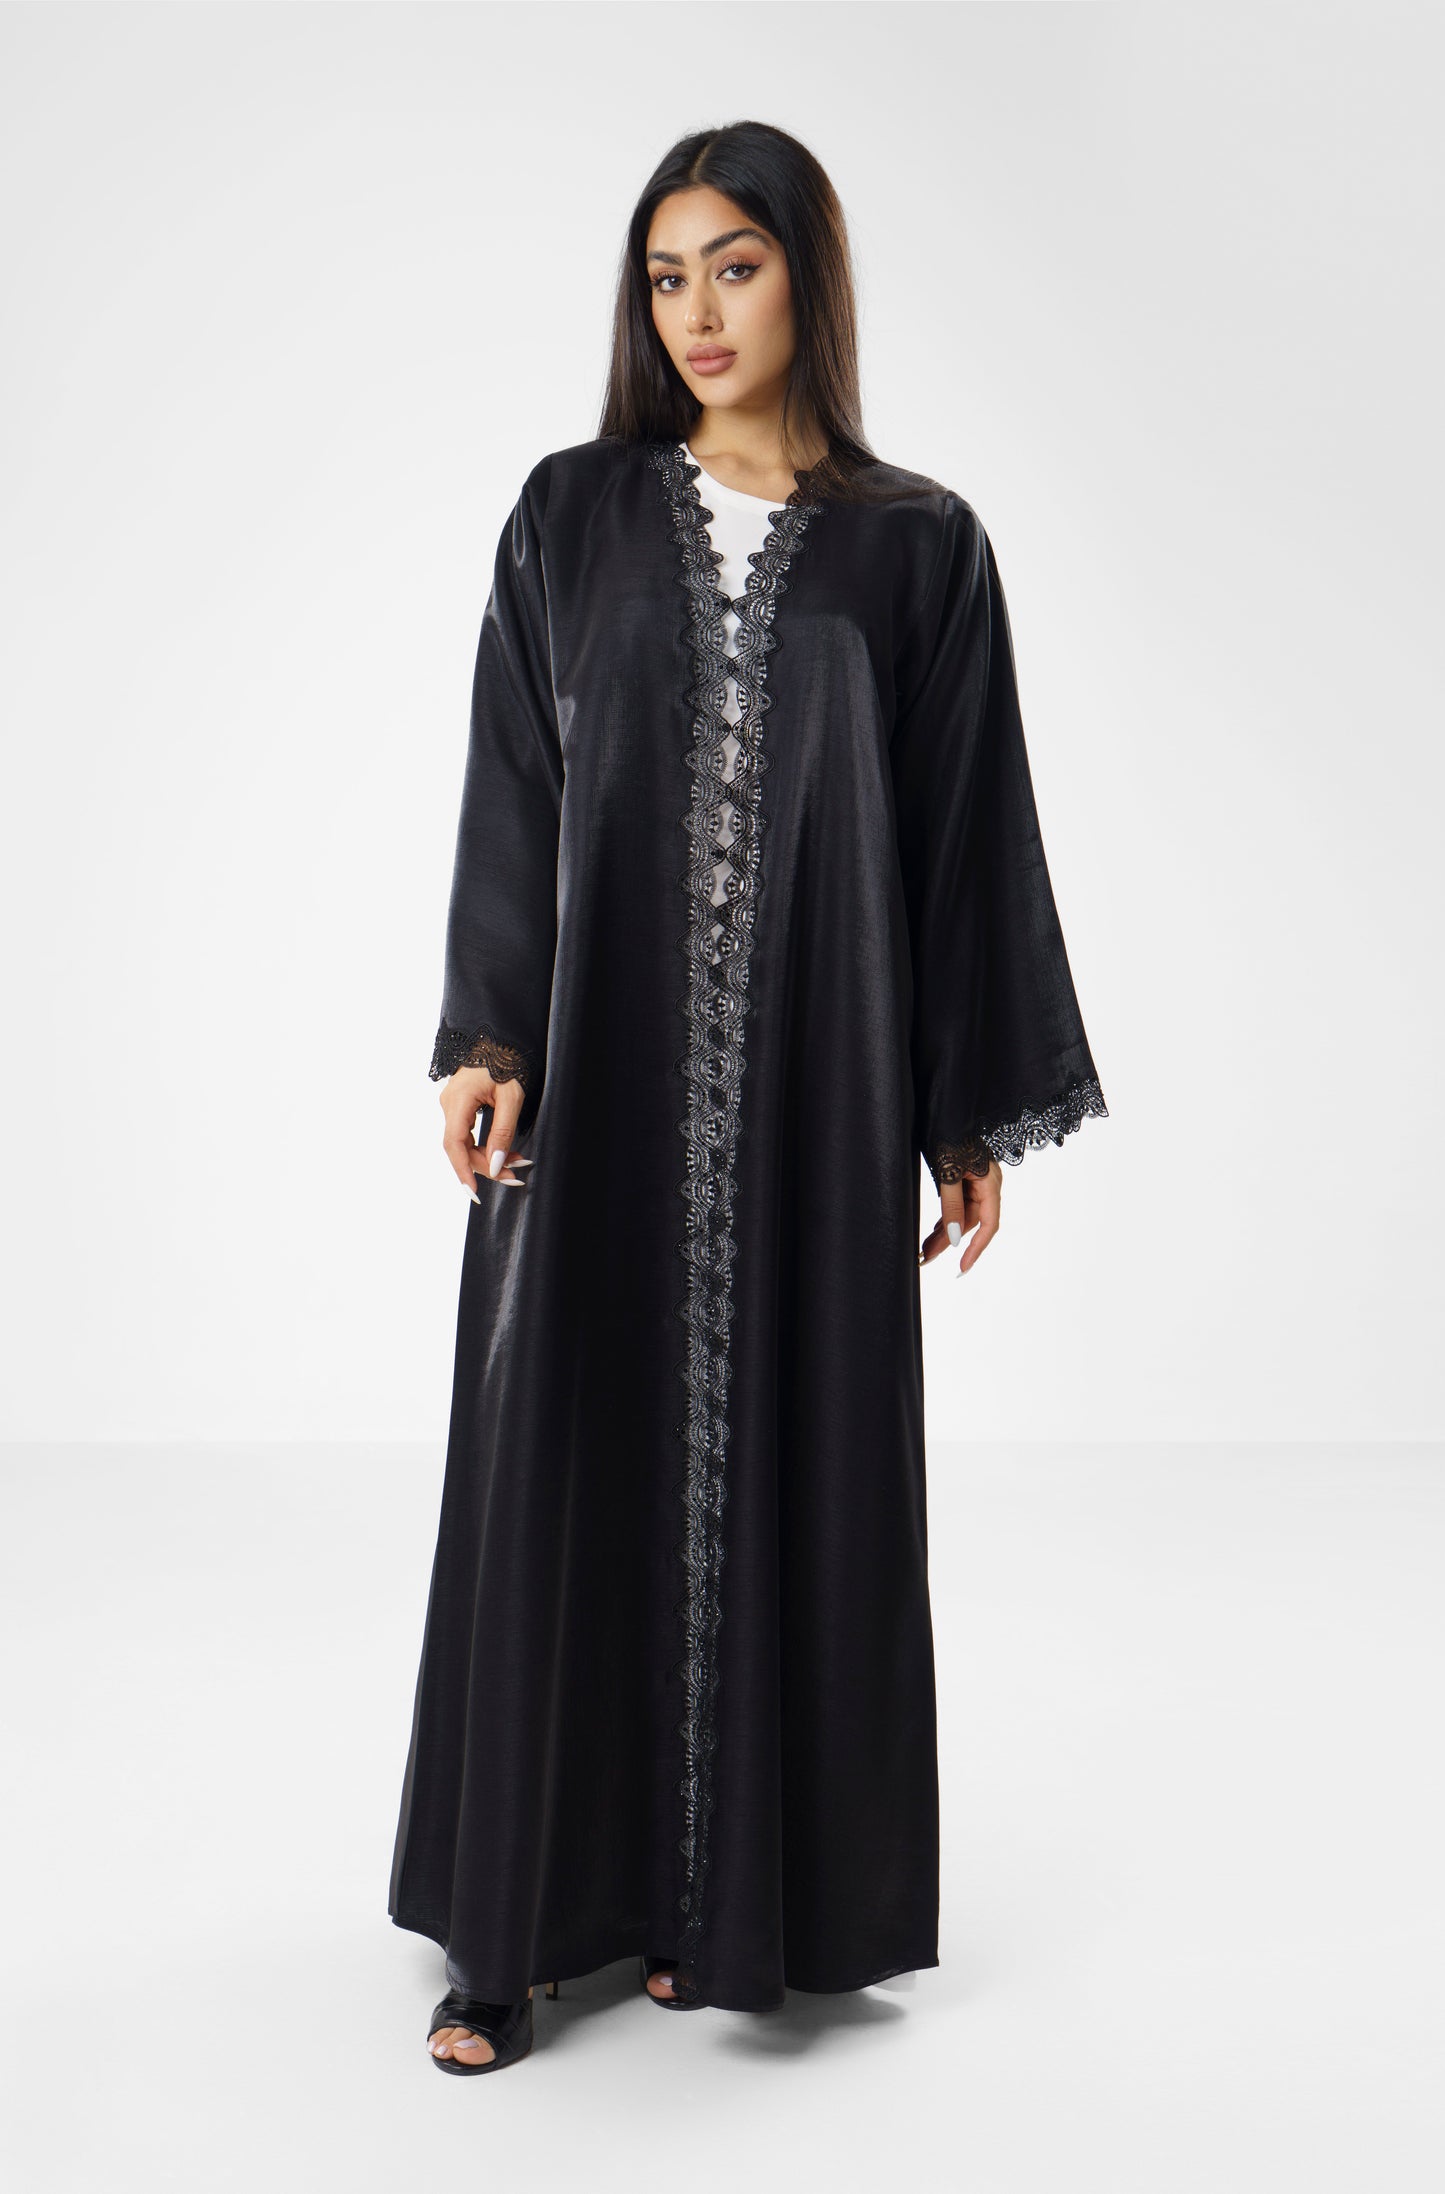 Elegant Black Abaya with Lace Trim Detailing